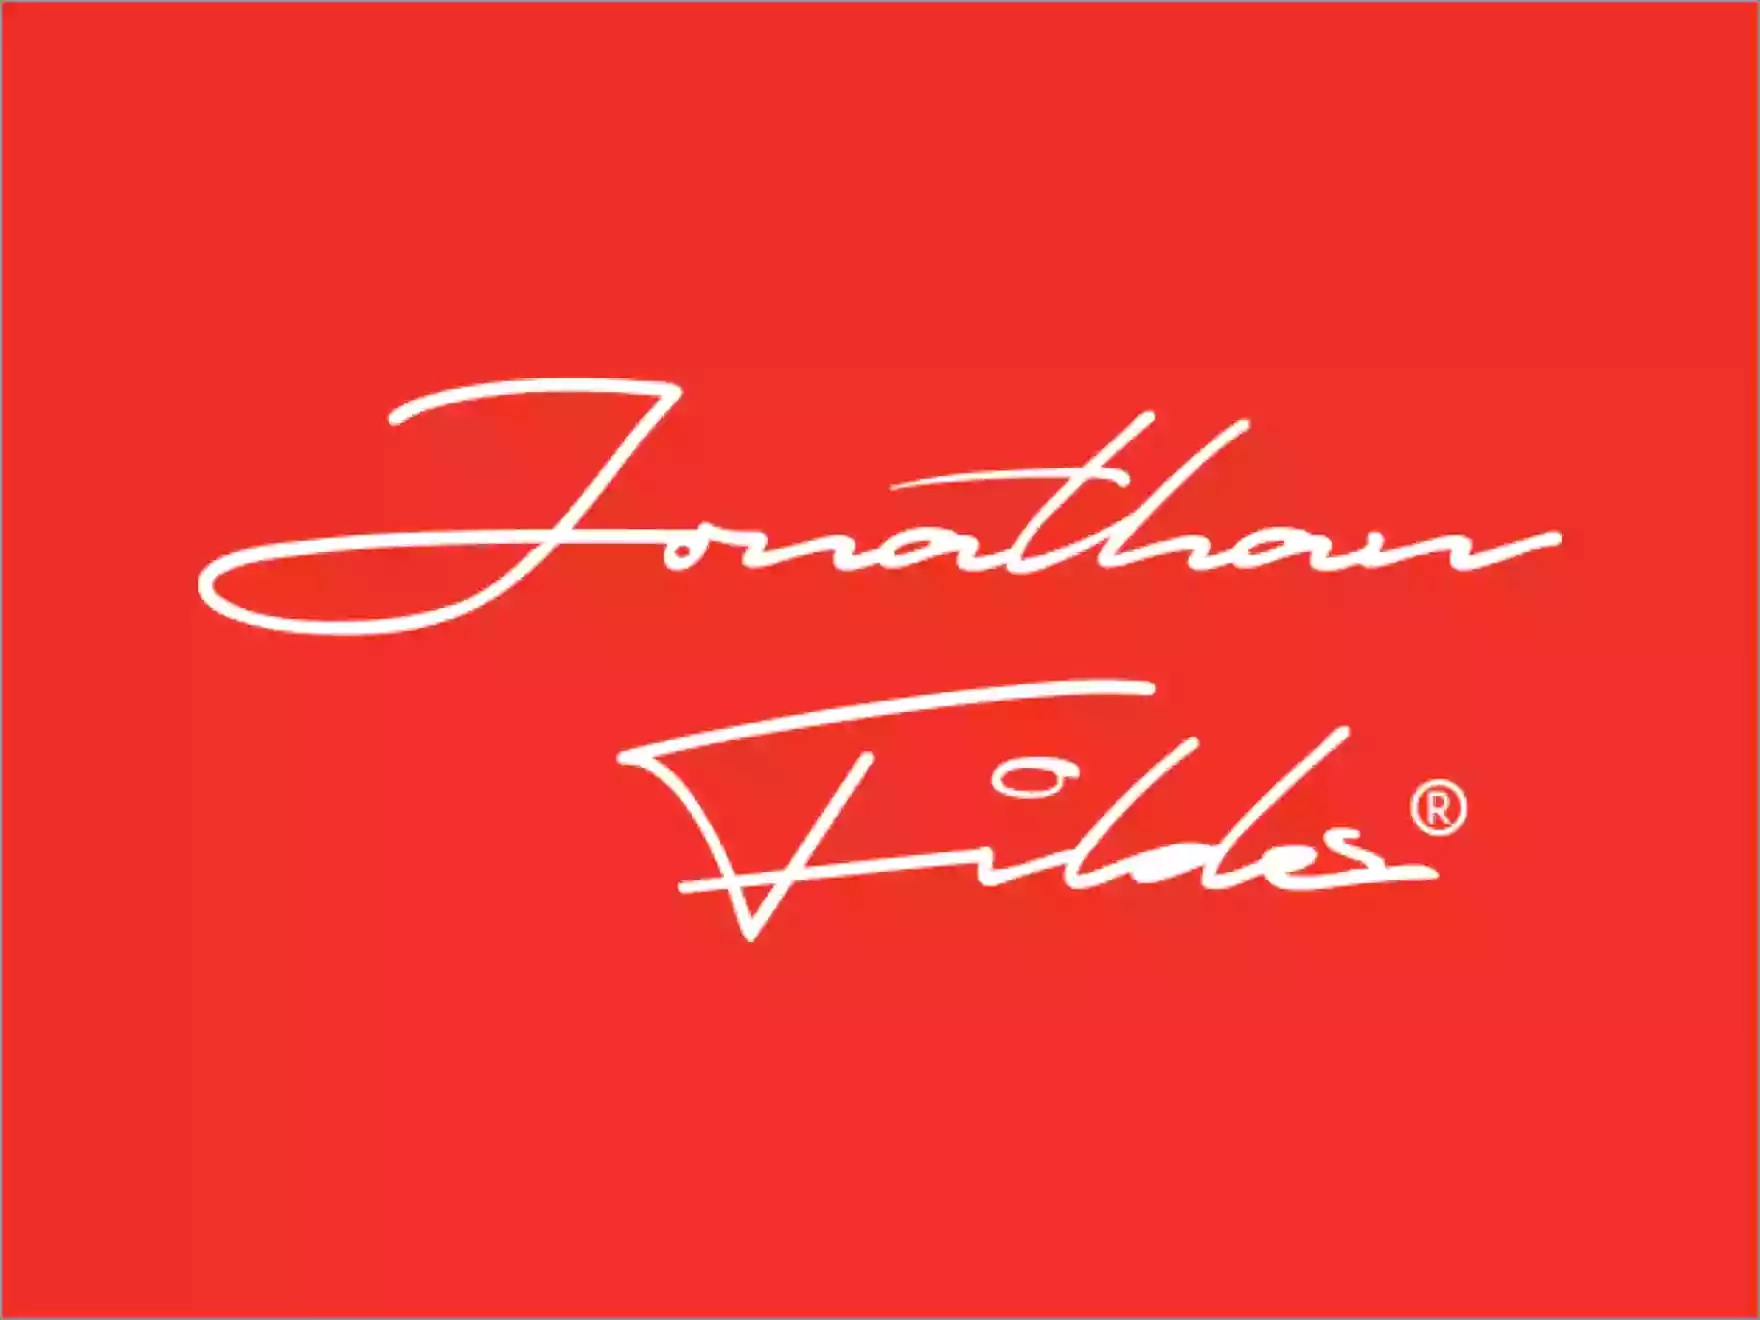 Jonathan Fildes Services Ltd